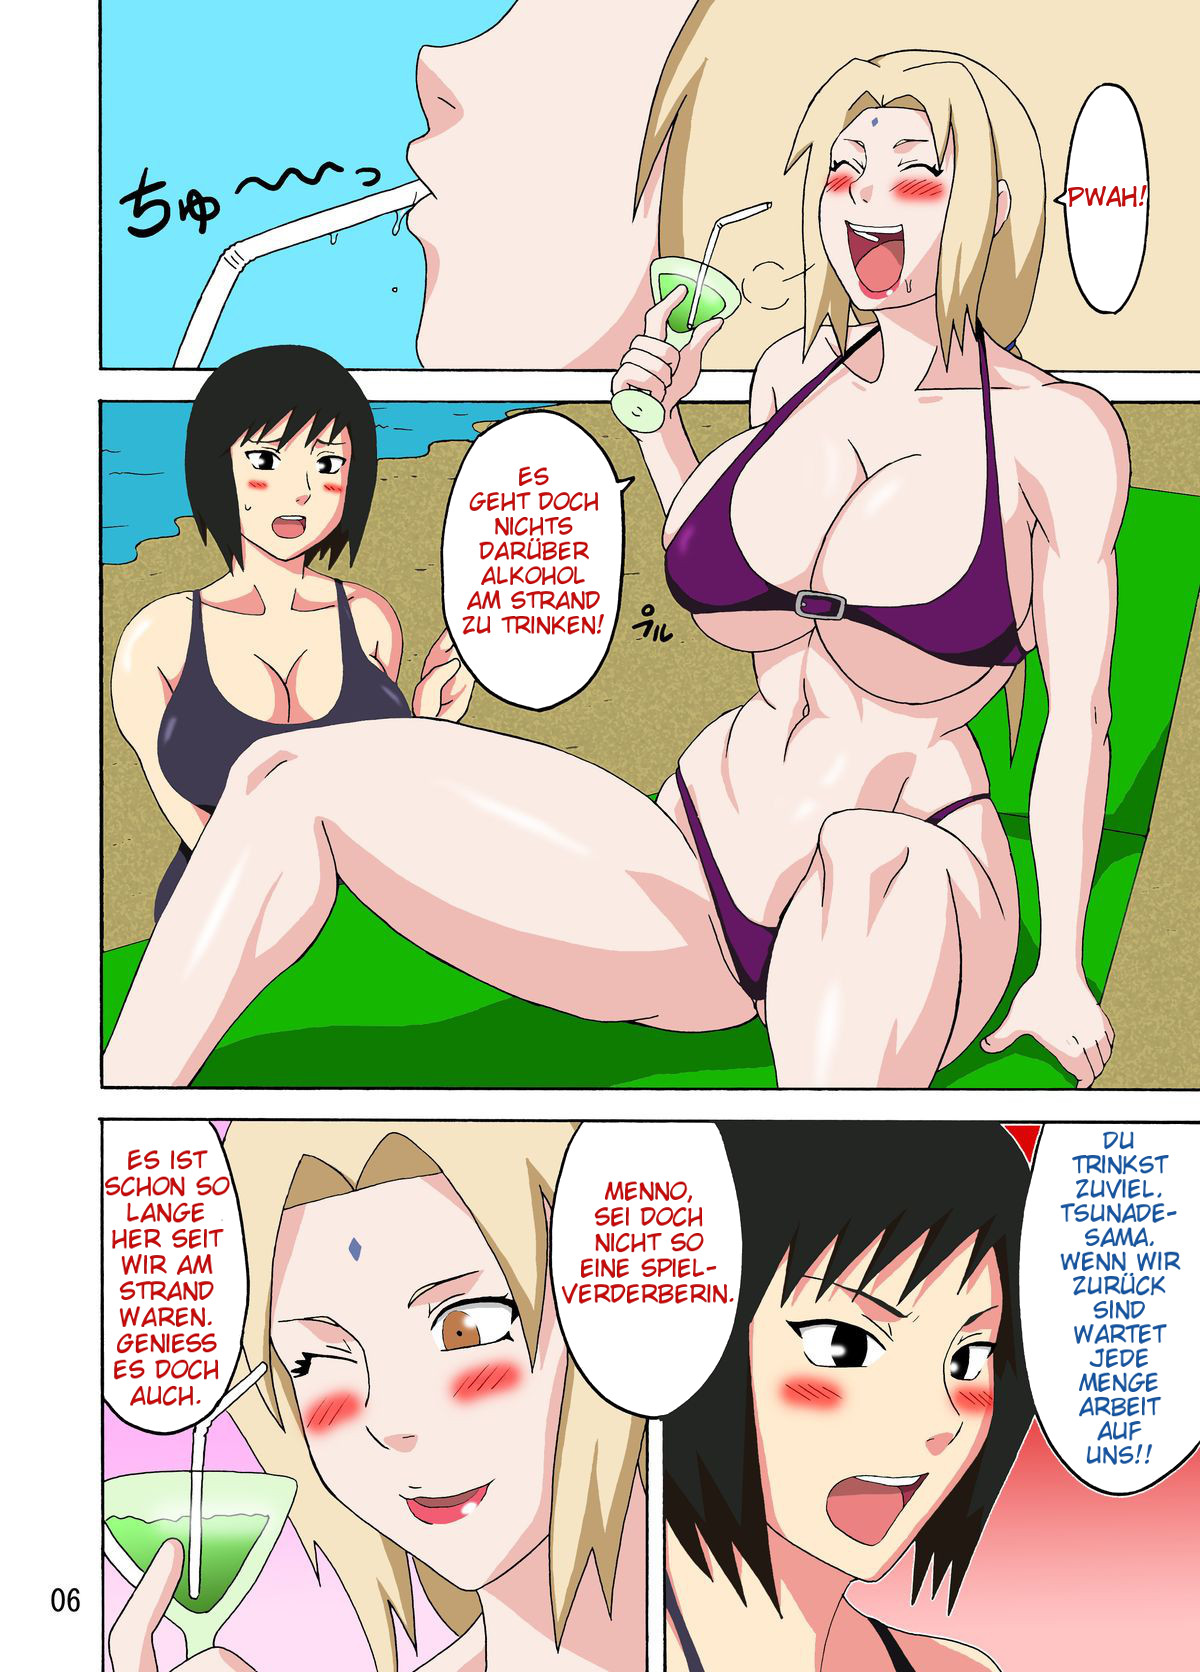 Read Tsunade S Obscene Beach Naruto [german] [colorized] Hentai Online Porn Manga And Doujinshi